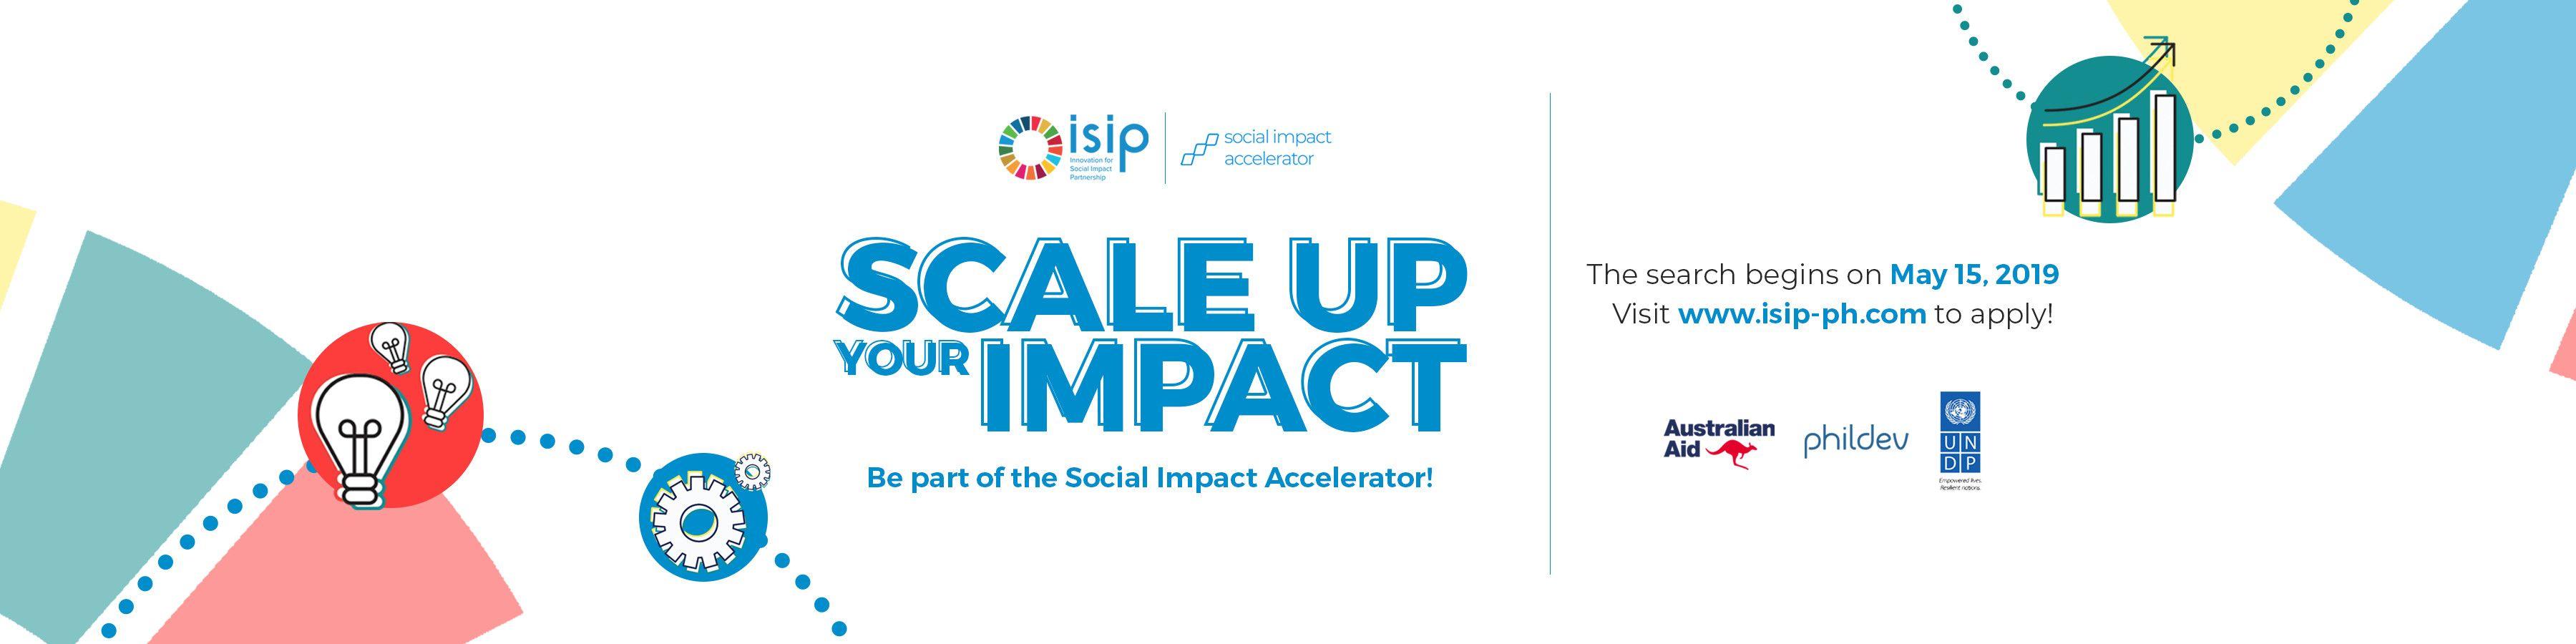 Isip Logo - Innovation for Social Impact Partnership (ISIP)